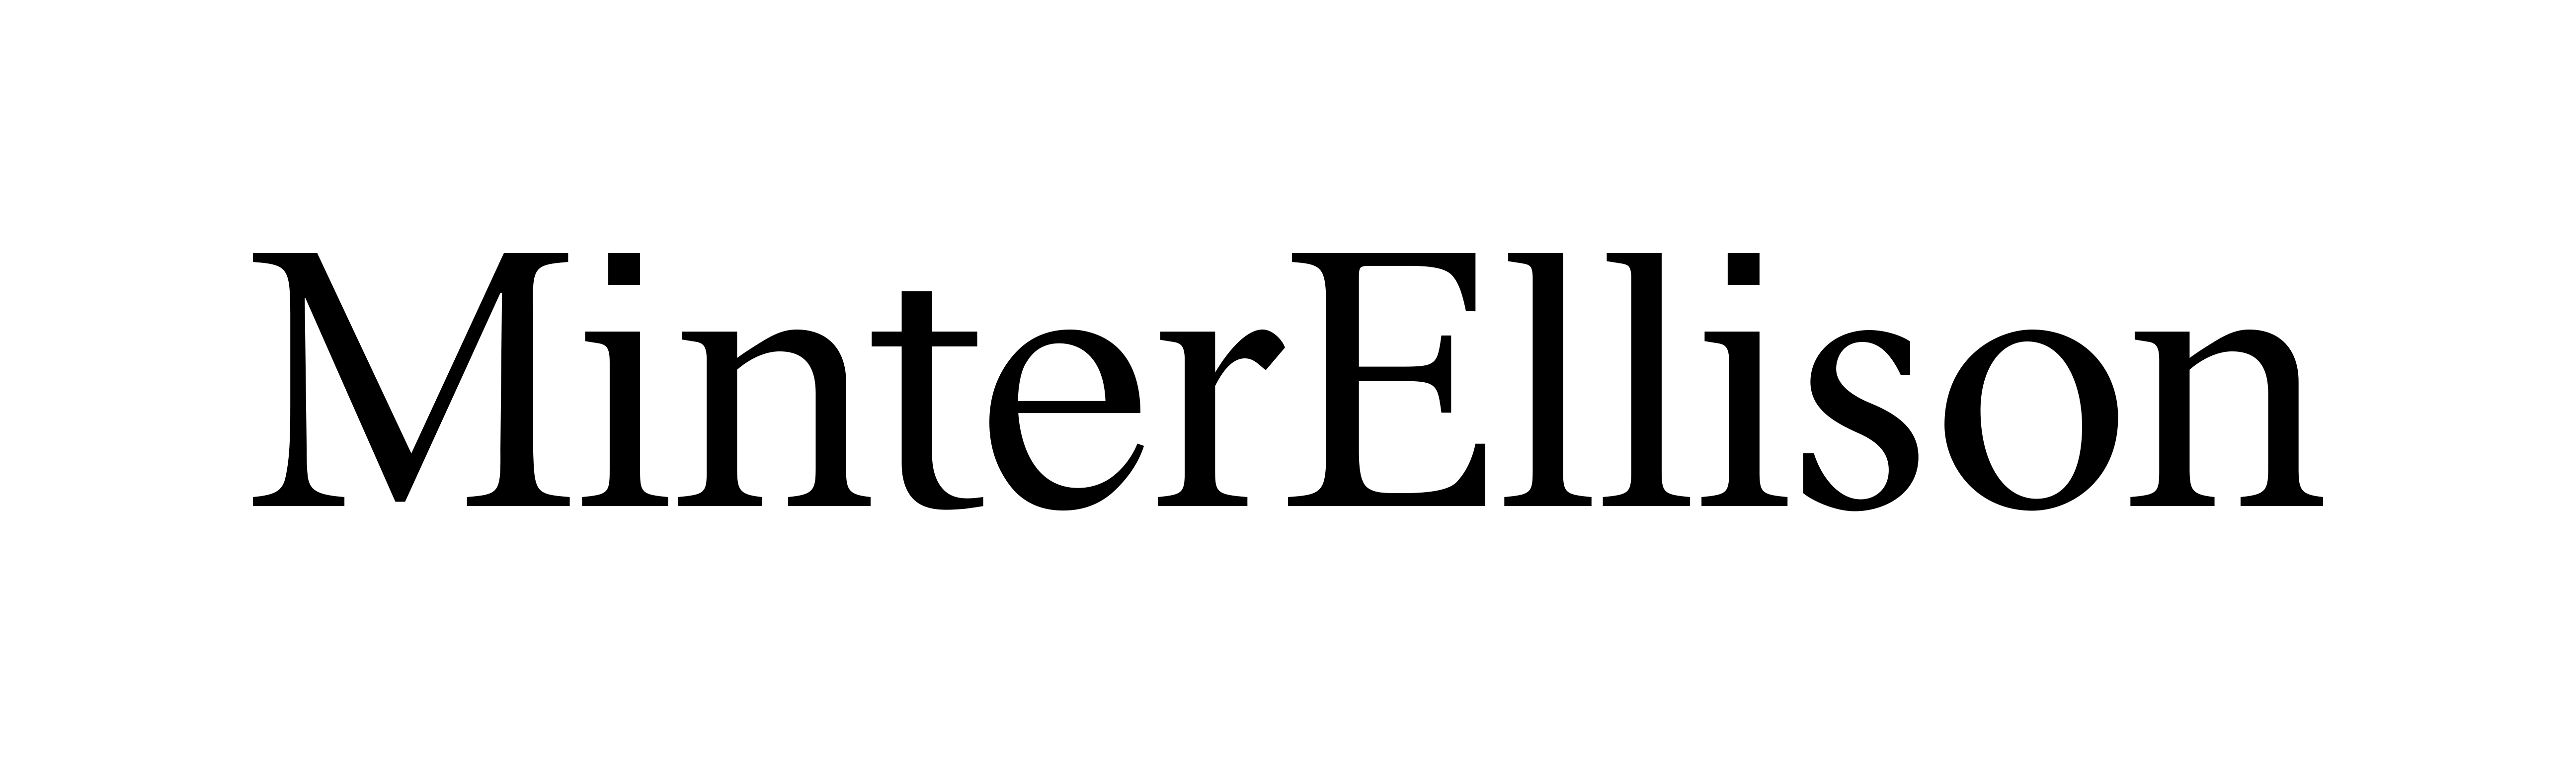 Minter_Ellison_2015_logo